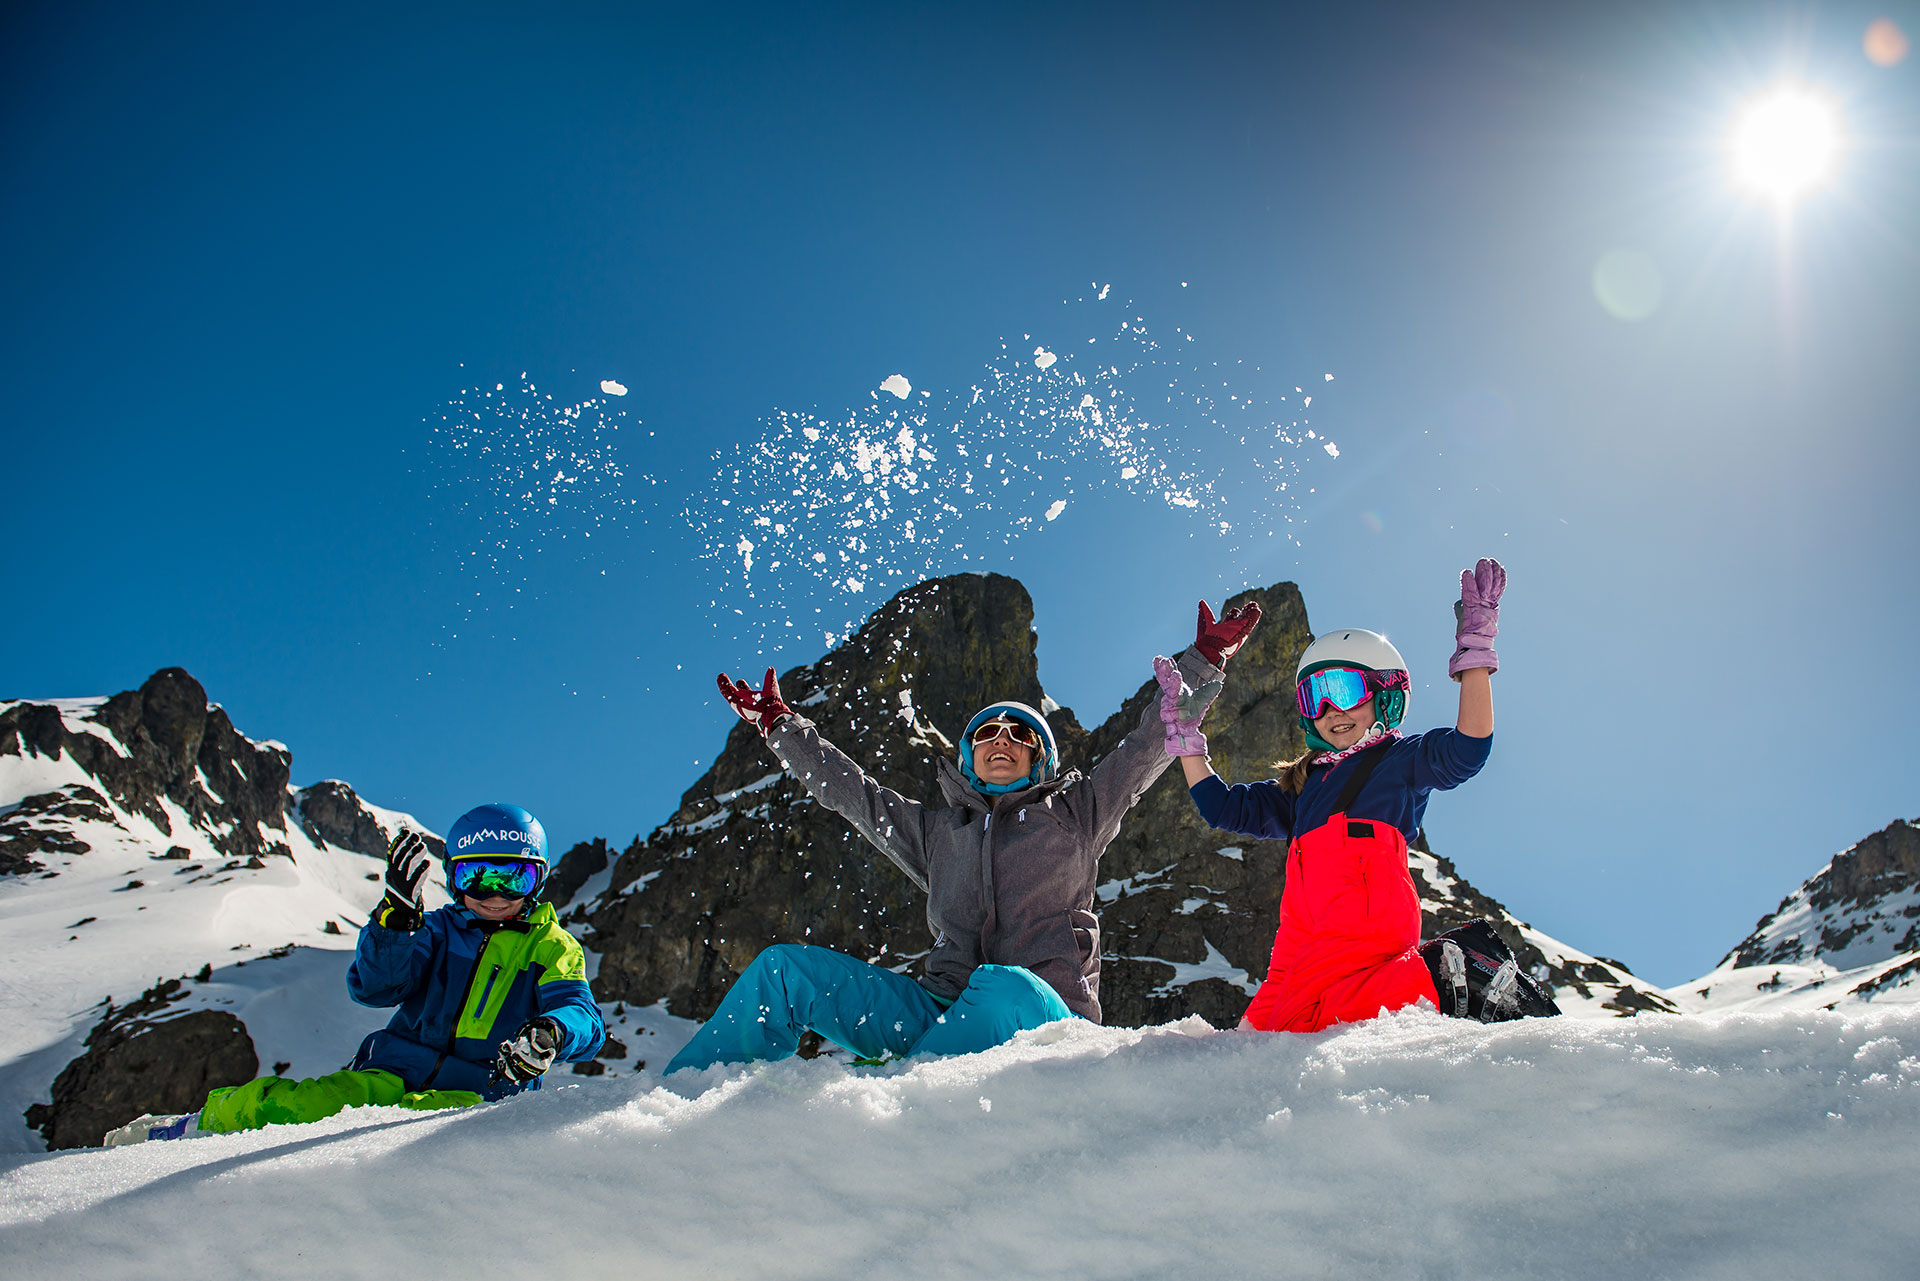 Chamrousse activité famille neige hiver station ski montagne grenoble isère alpes france - © Images-et-reves.fr